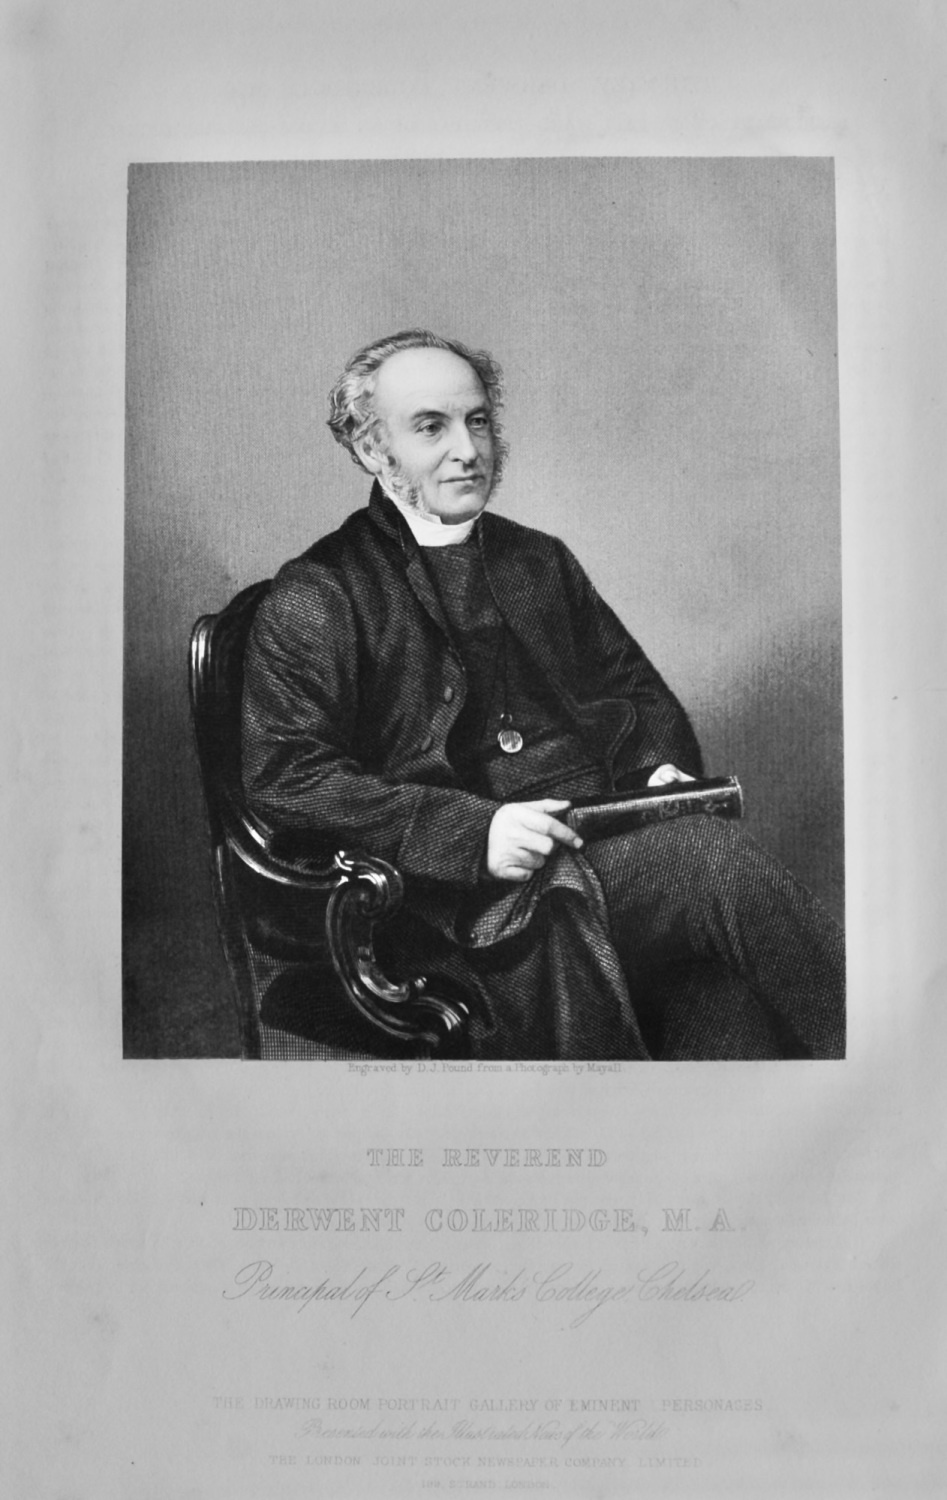 The Reverend Derwent Coleridge,  M.A. Principal of St. Mark's College, Chel